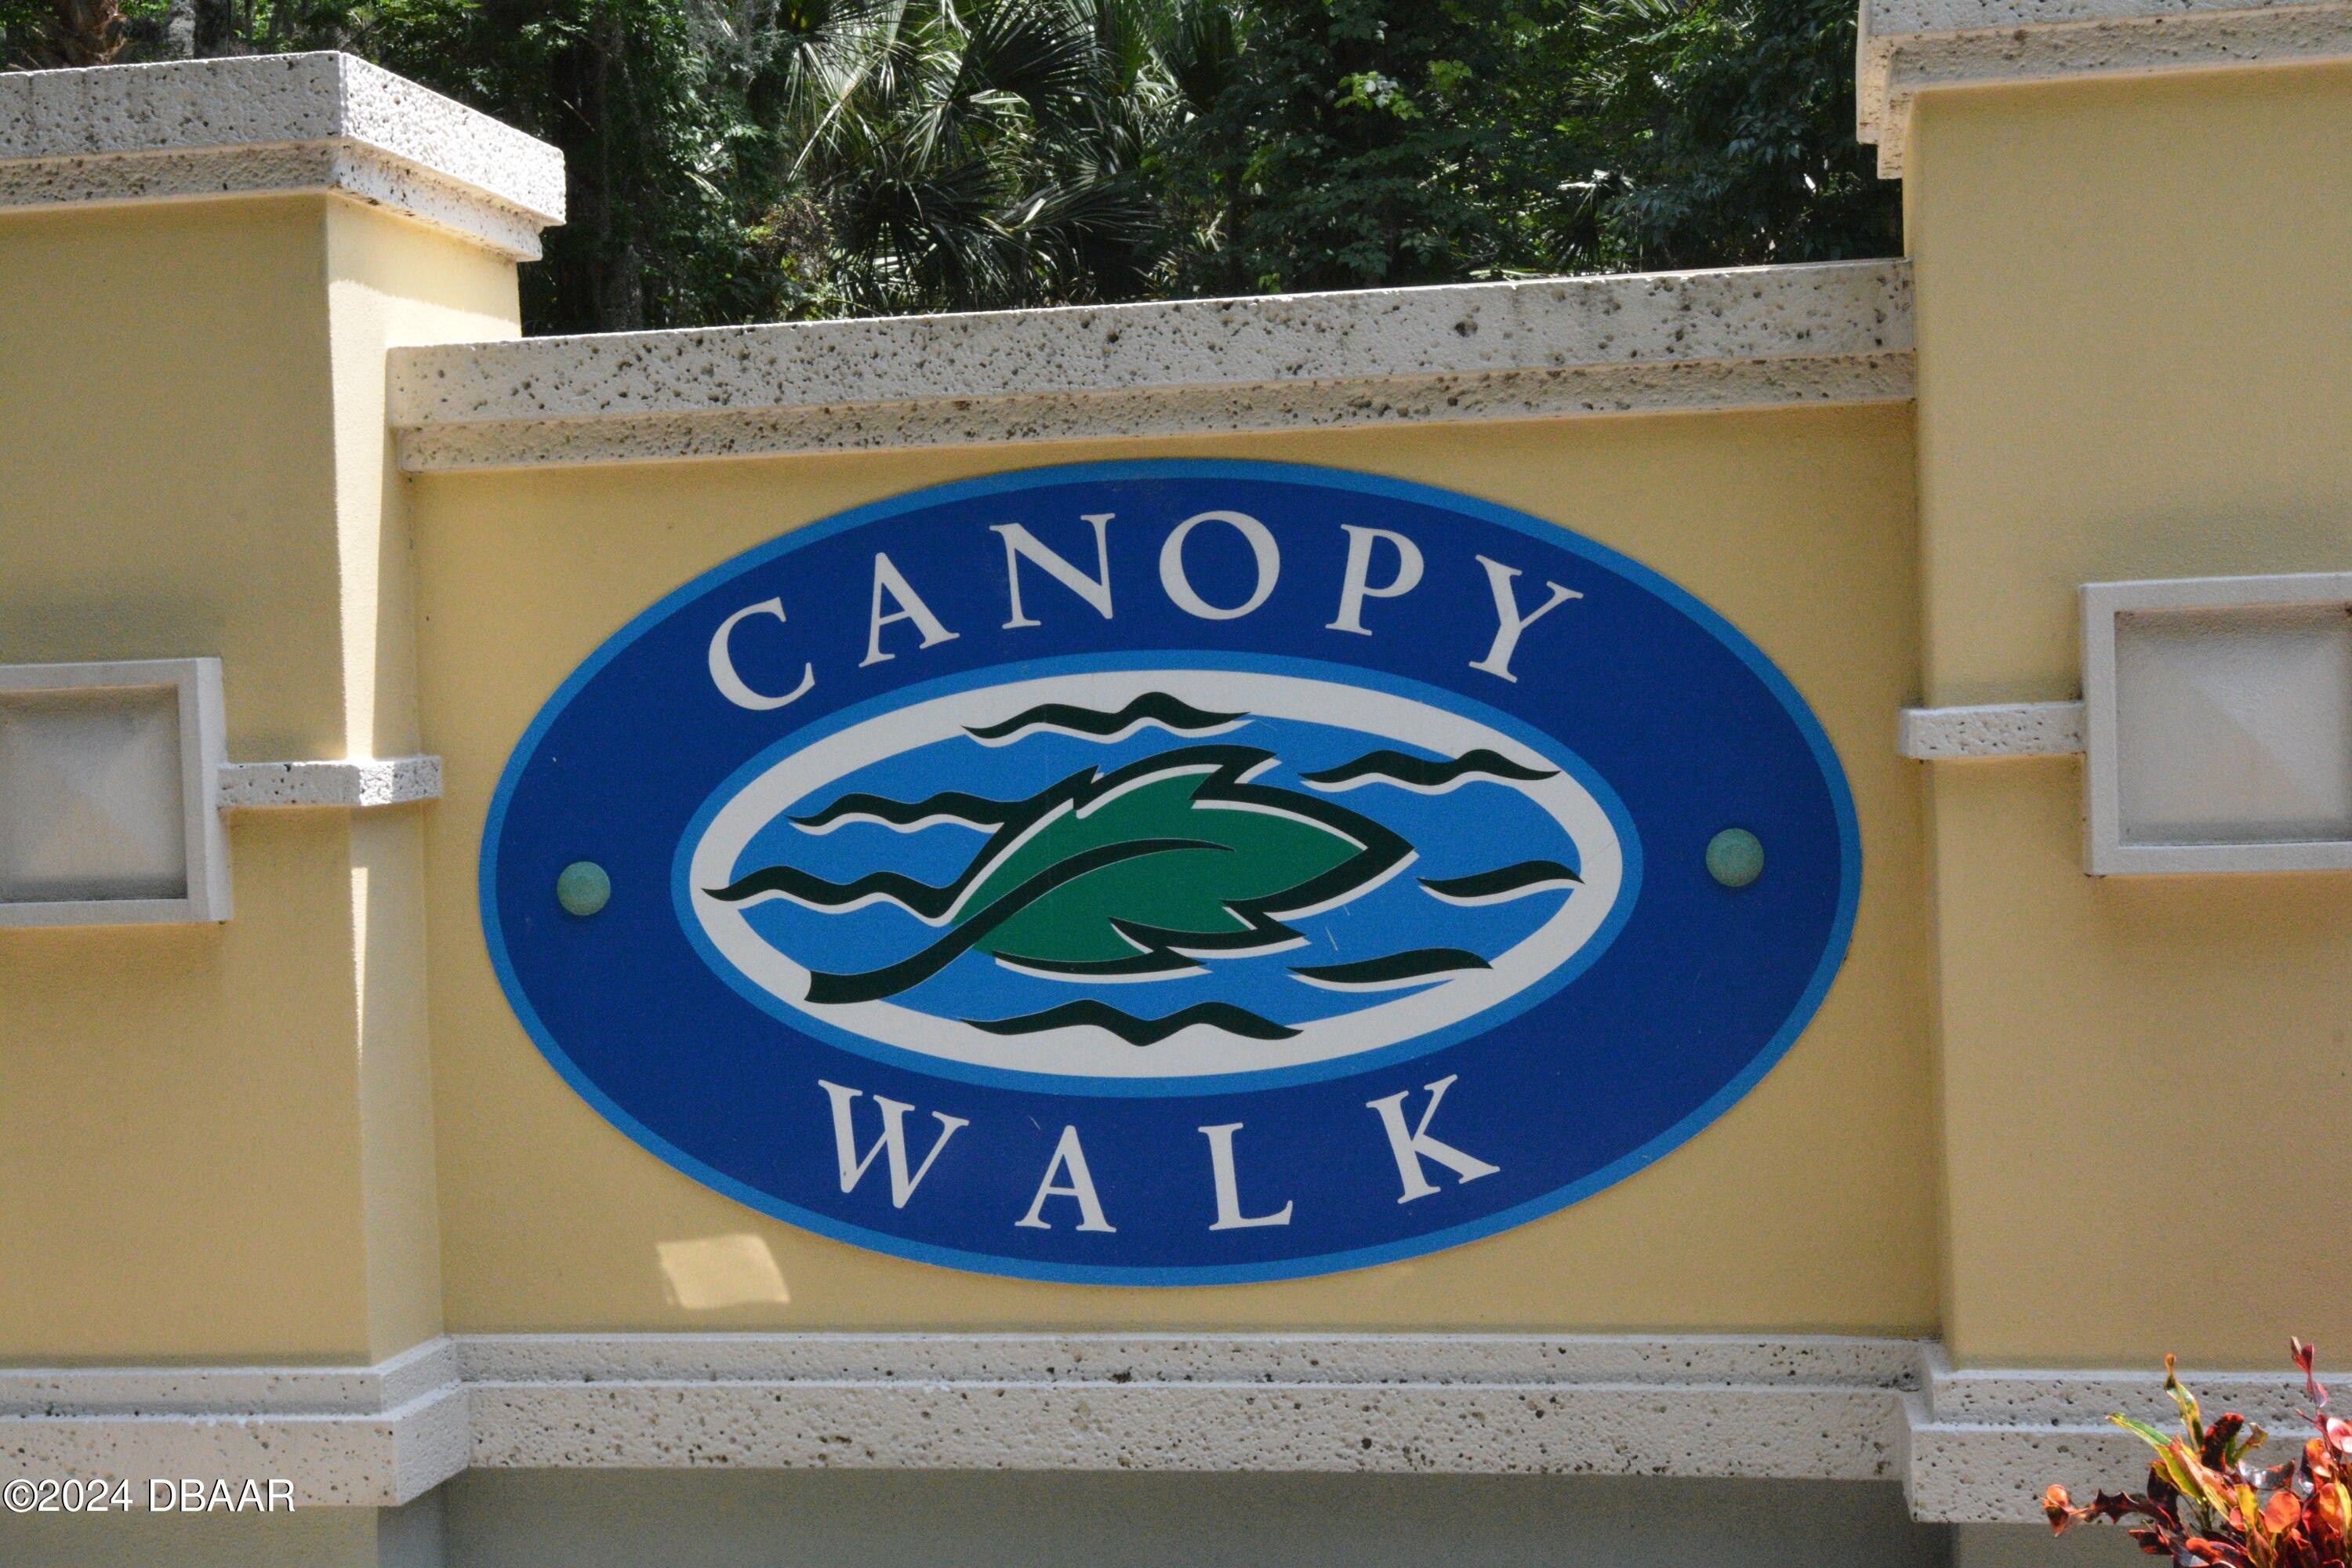 2. 300 Canopy Walk Lane